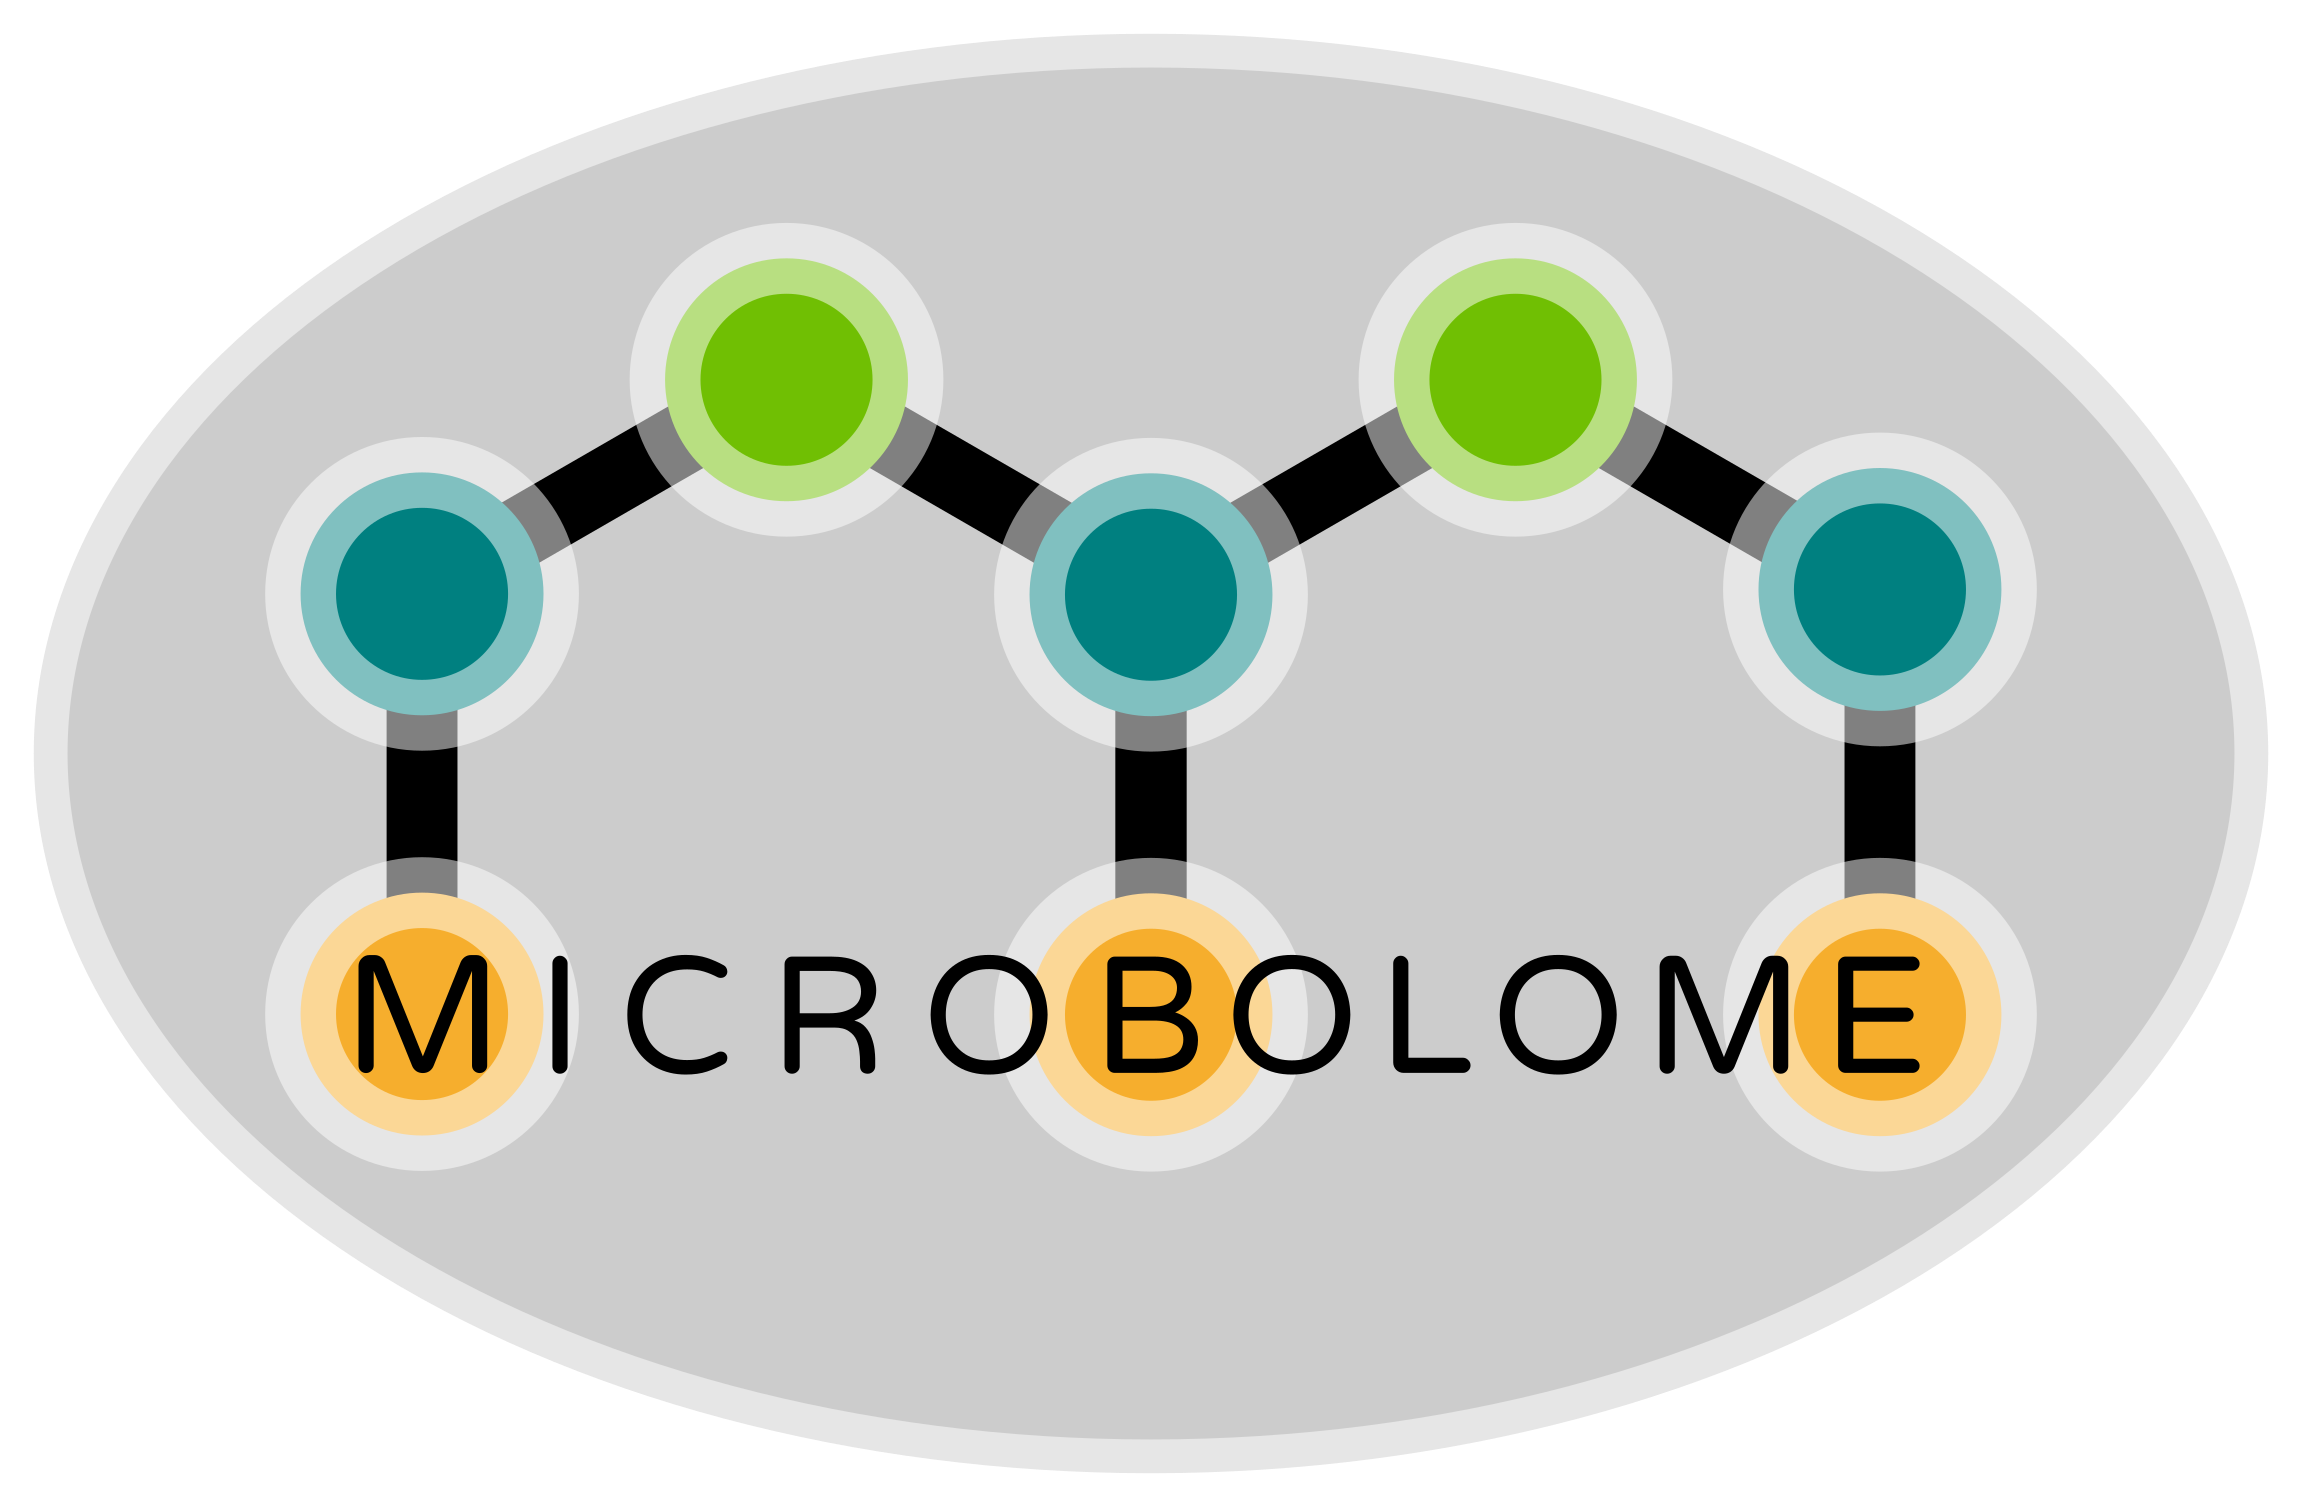 Microbolome logo